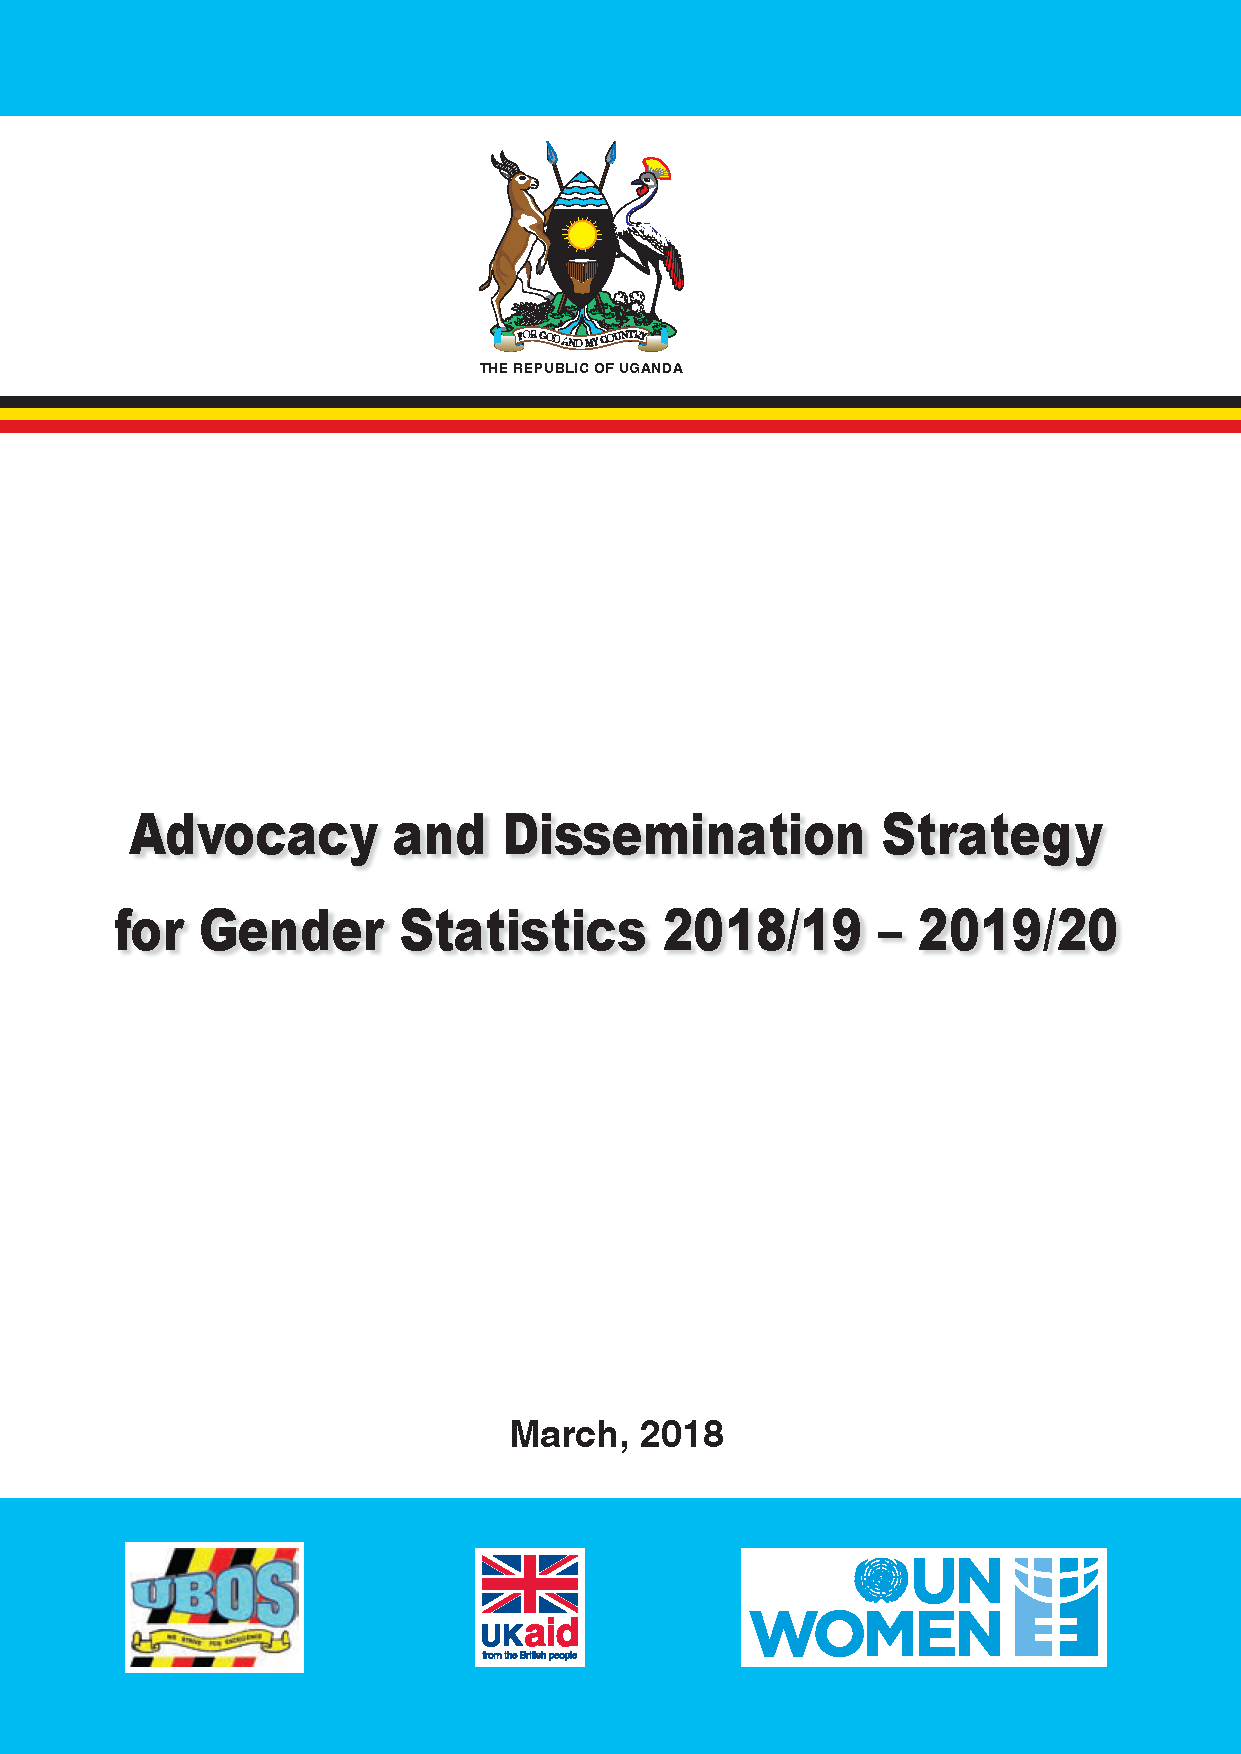 Uganda advocacy strategy